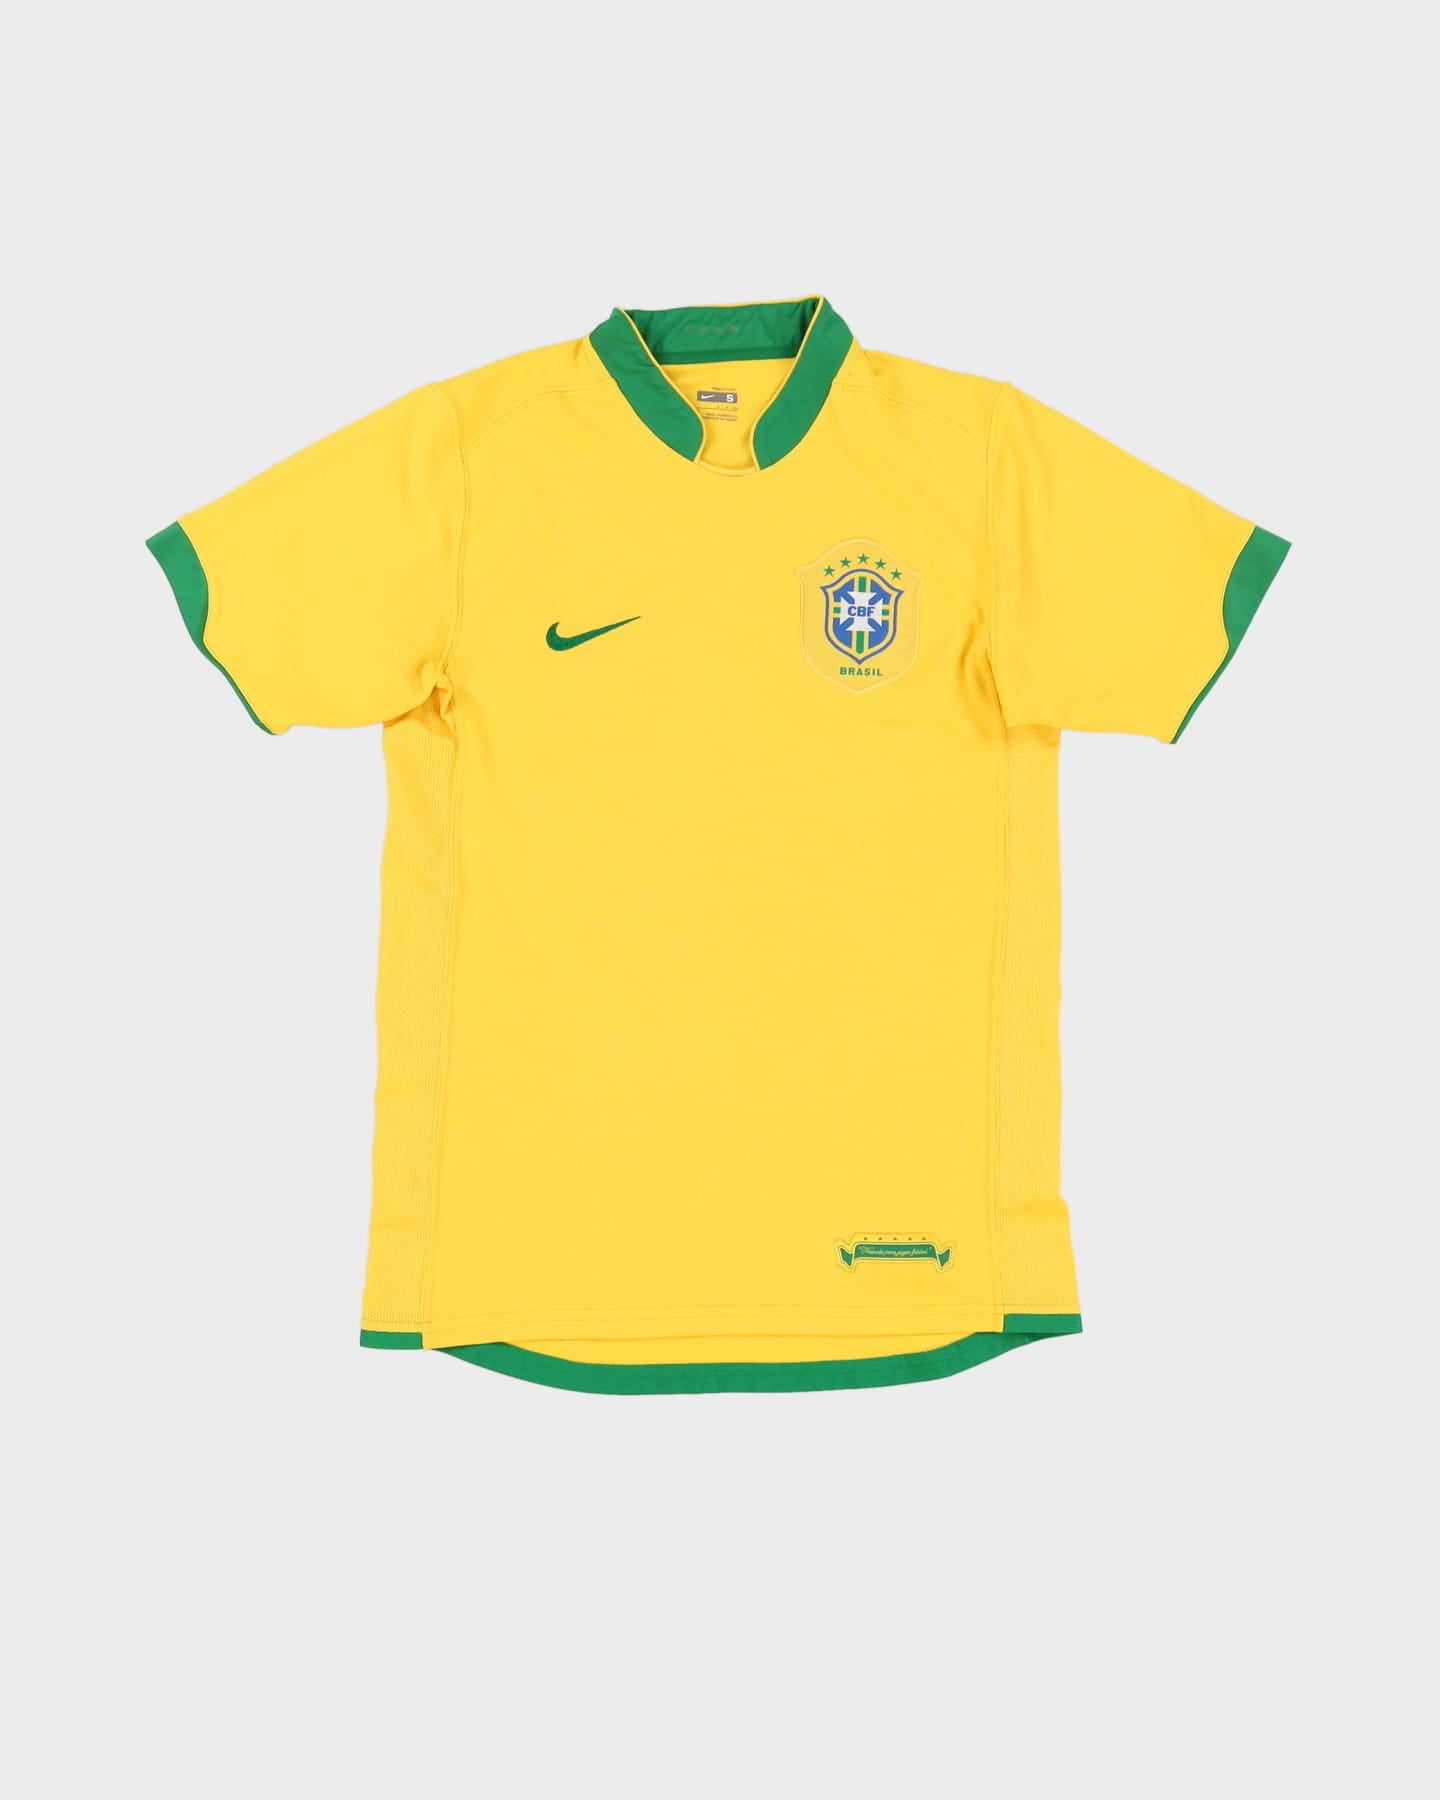 Brazil Nike Yellow Home Football Shirt / Jersey - S